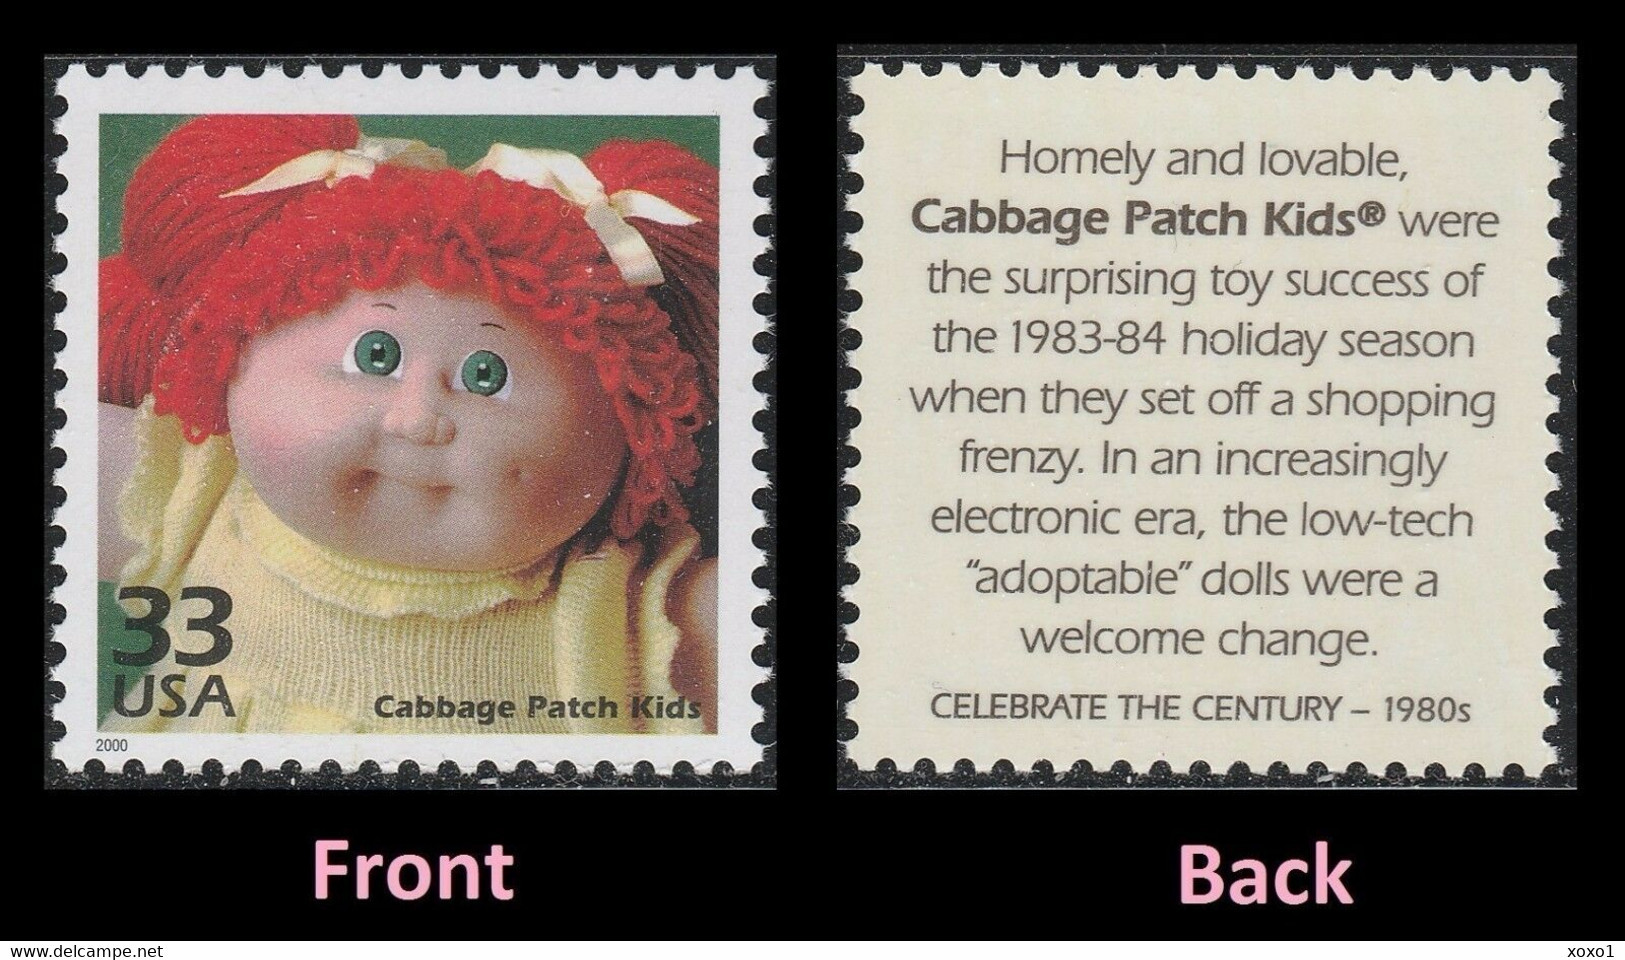 USA 2000 MiNr. 3251 Celebrate The Century 1980s  Childhood "Cabbage Patch Kids" Toy Dolls 1v MNH ** 0,80 € - Puppen